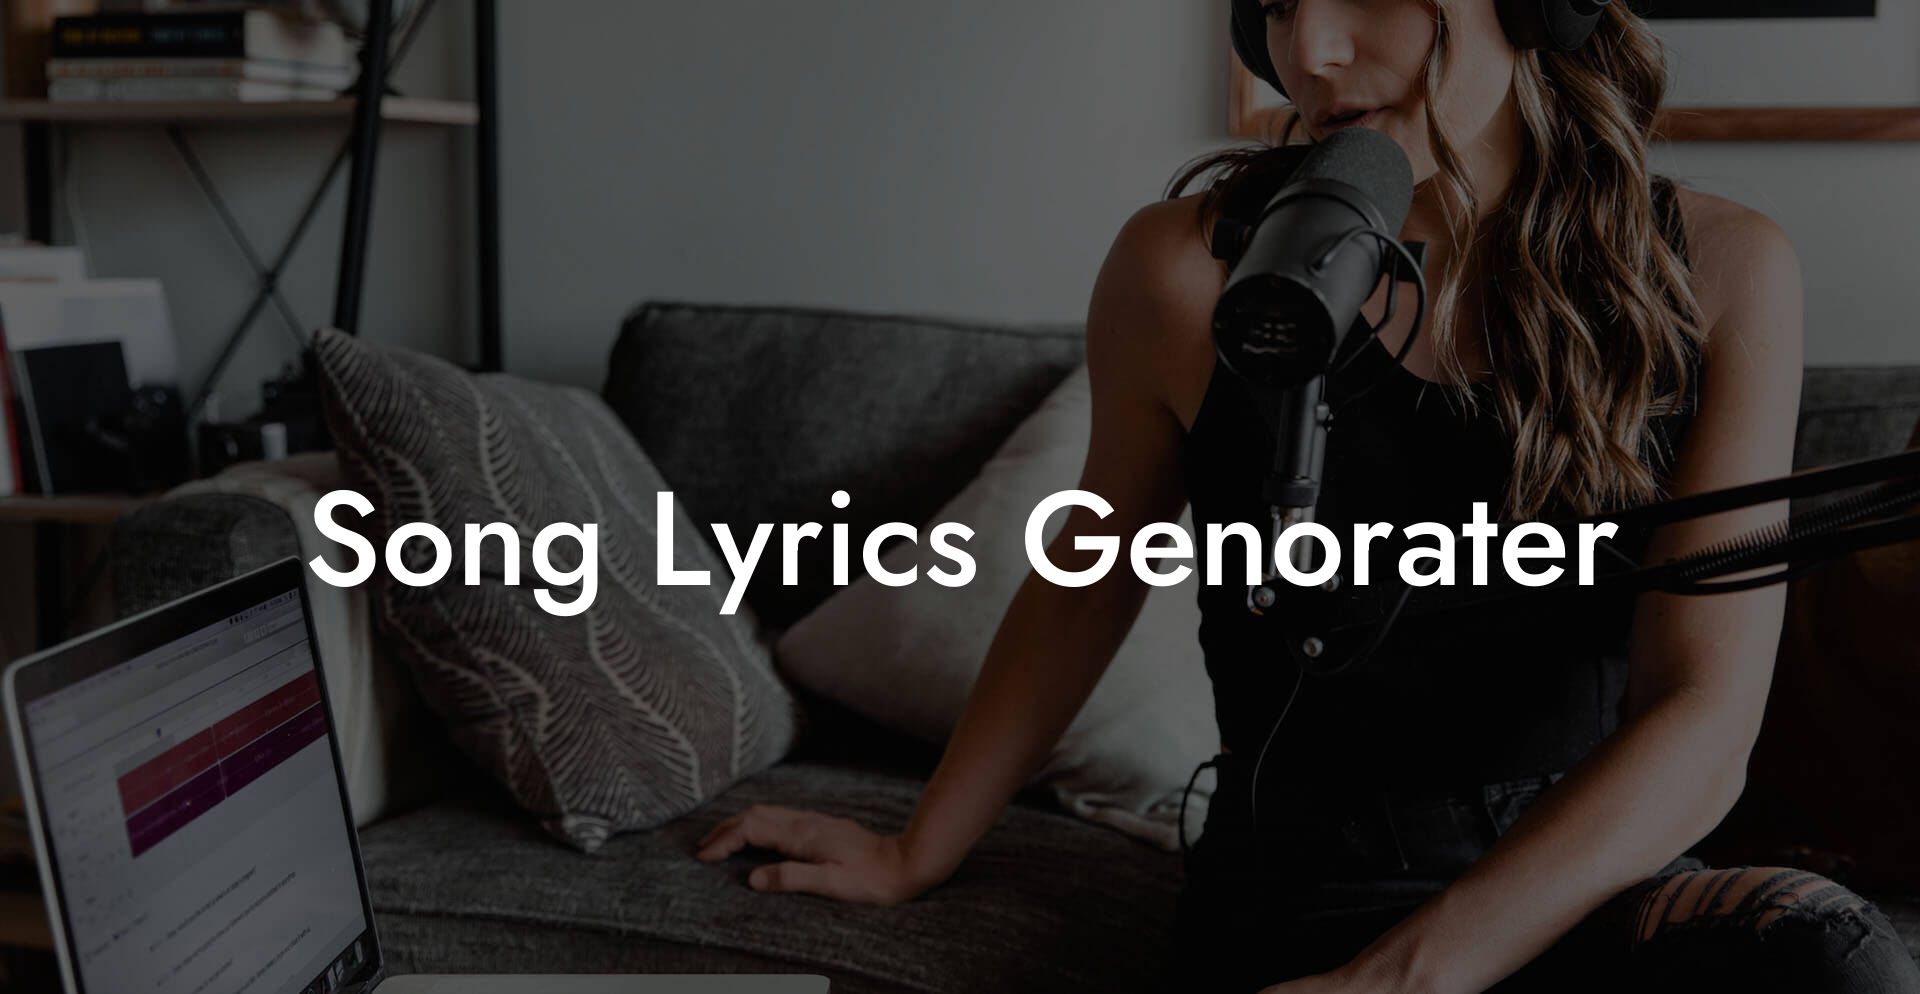 song lyrics genorater lyric assistant